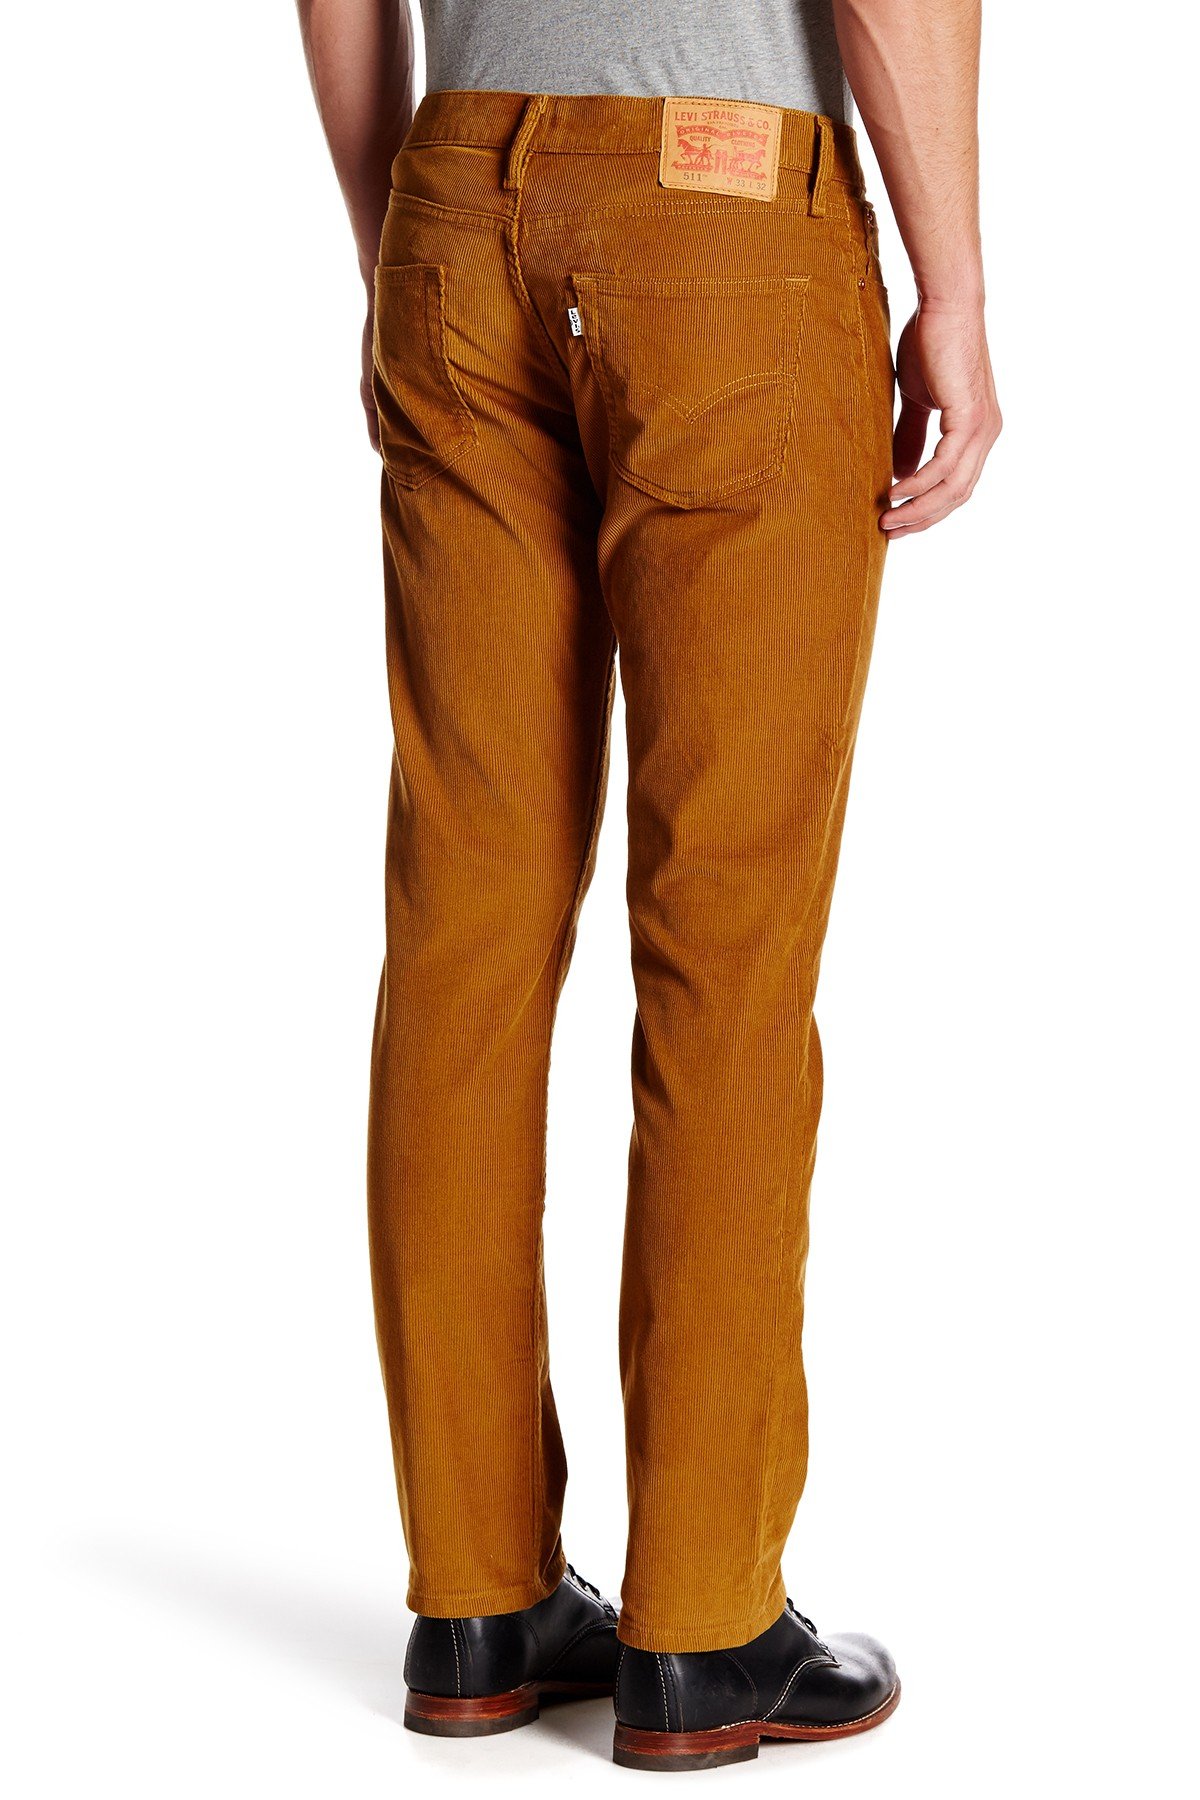 Lyst - Levi'S 511 Slim Fit Bronze Corduroy Pant in Brown for Men